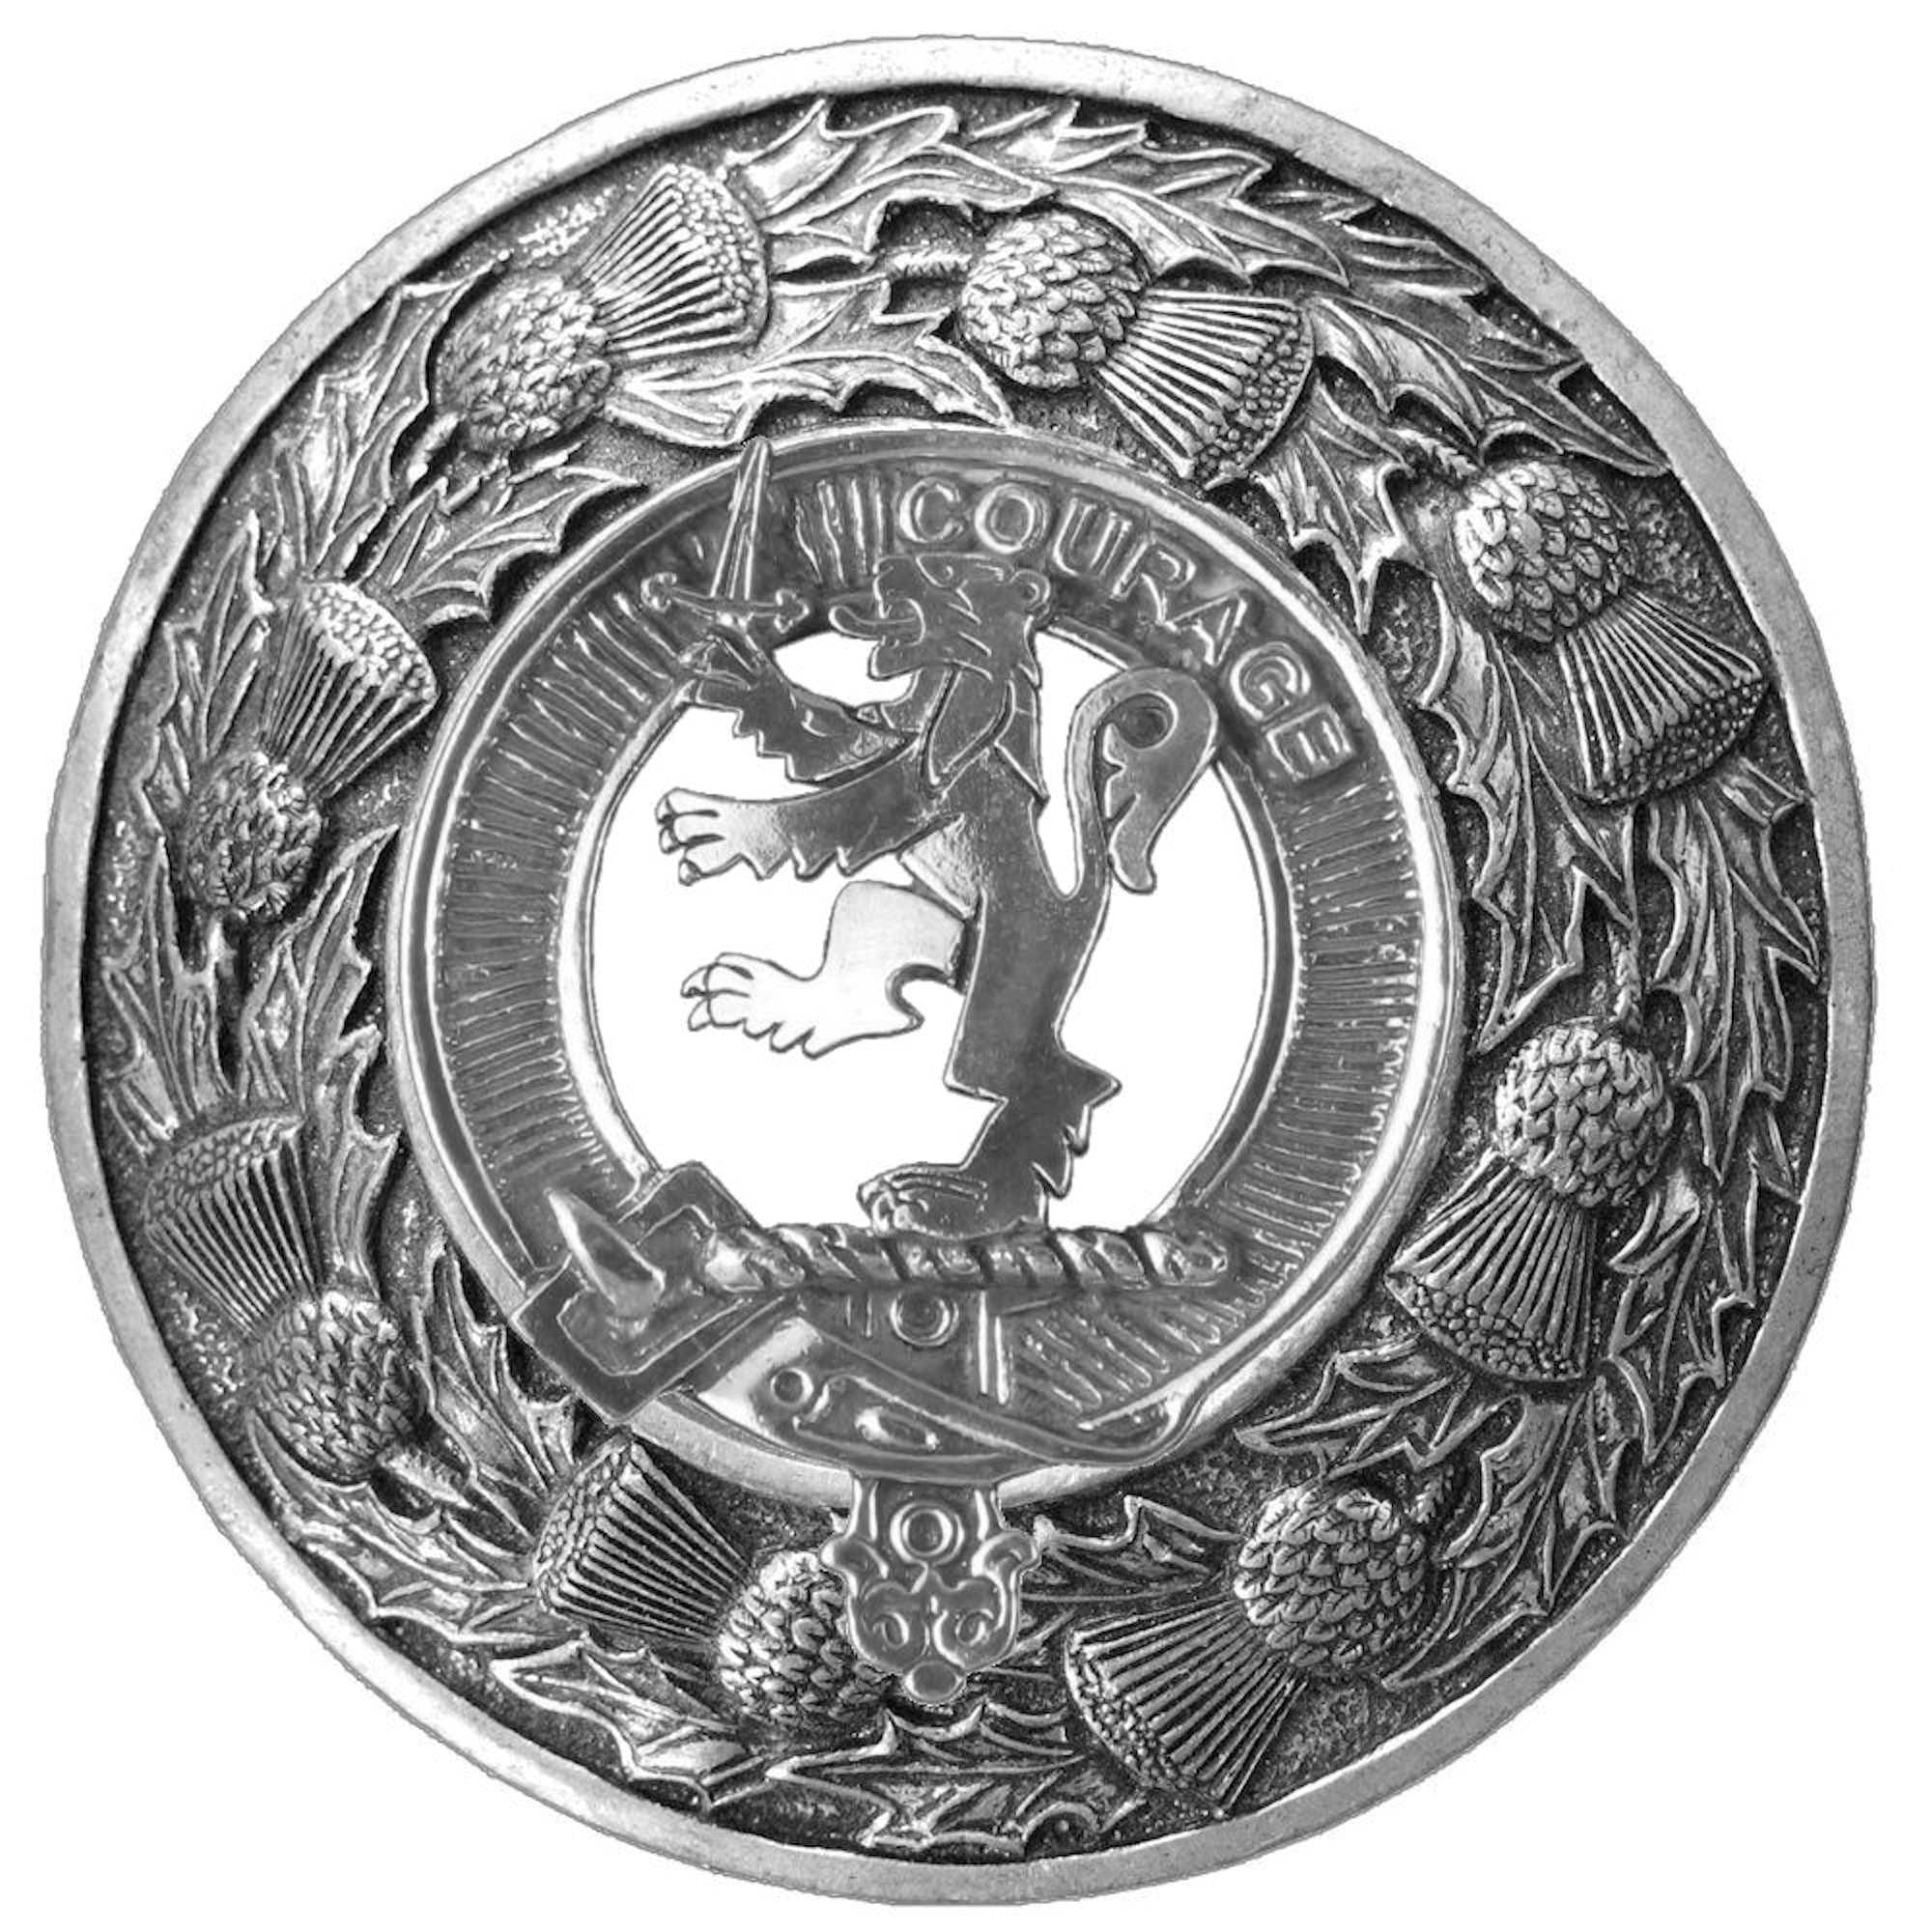 Cumming Clan Badge Scottish Plaid Brooch